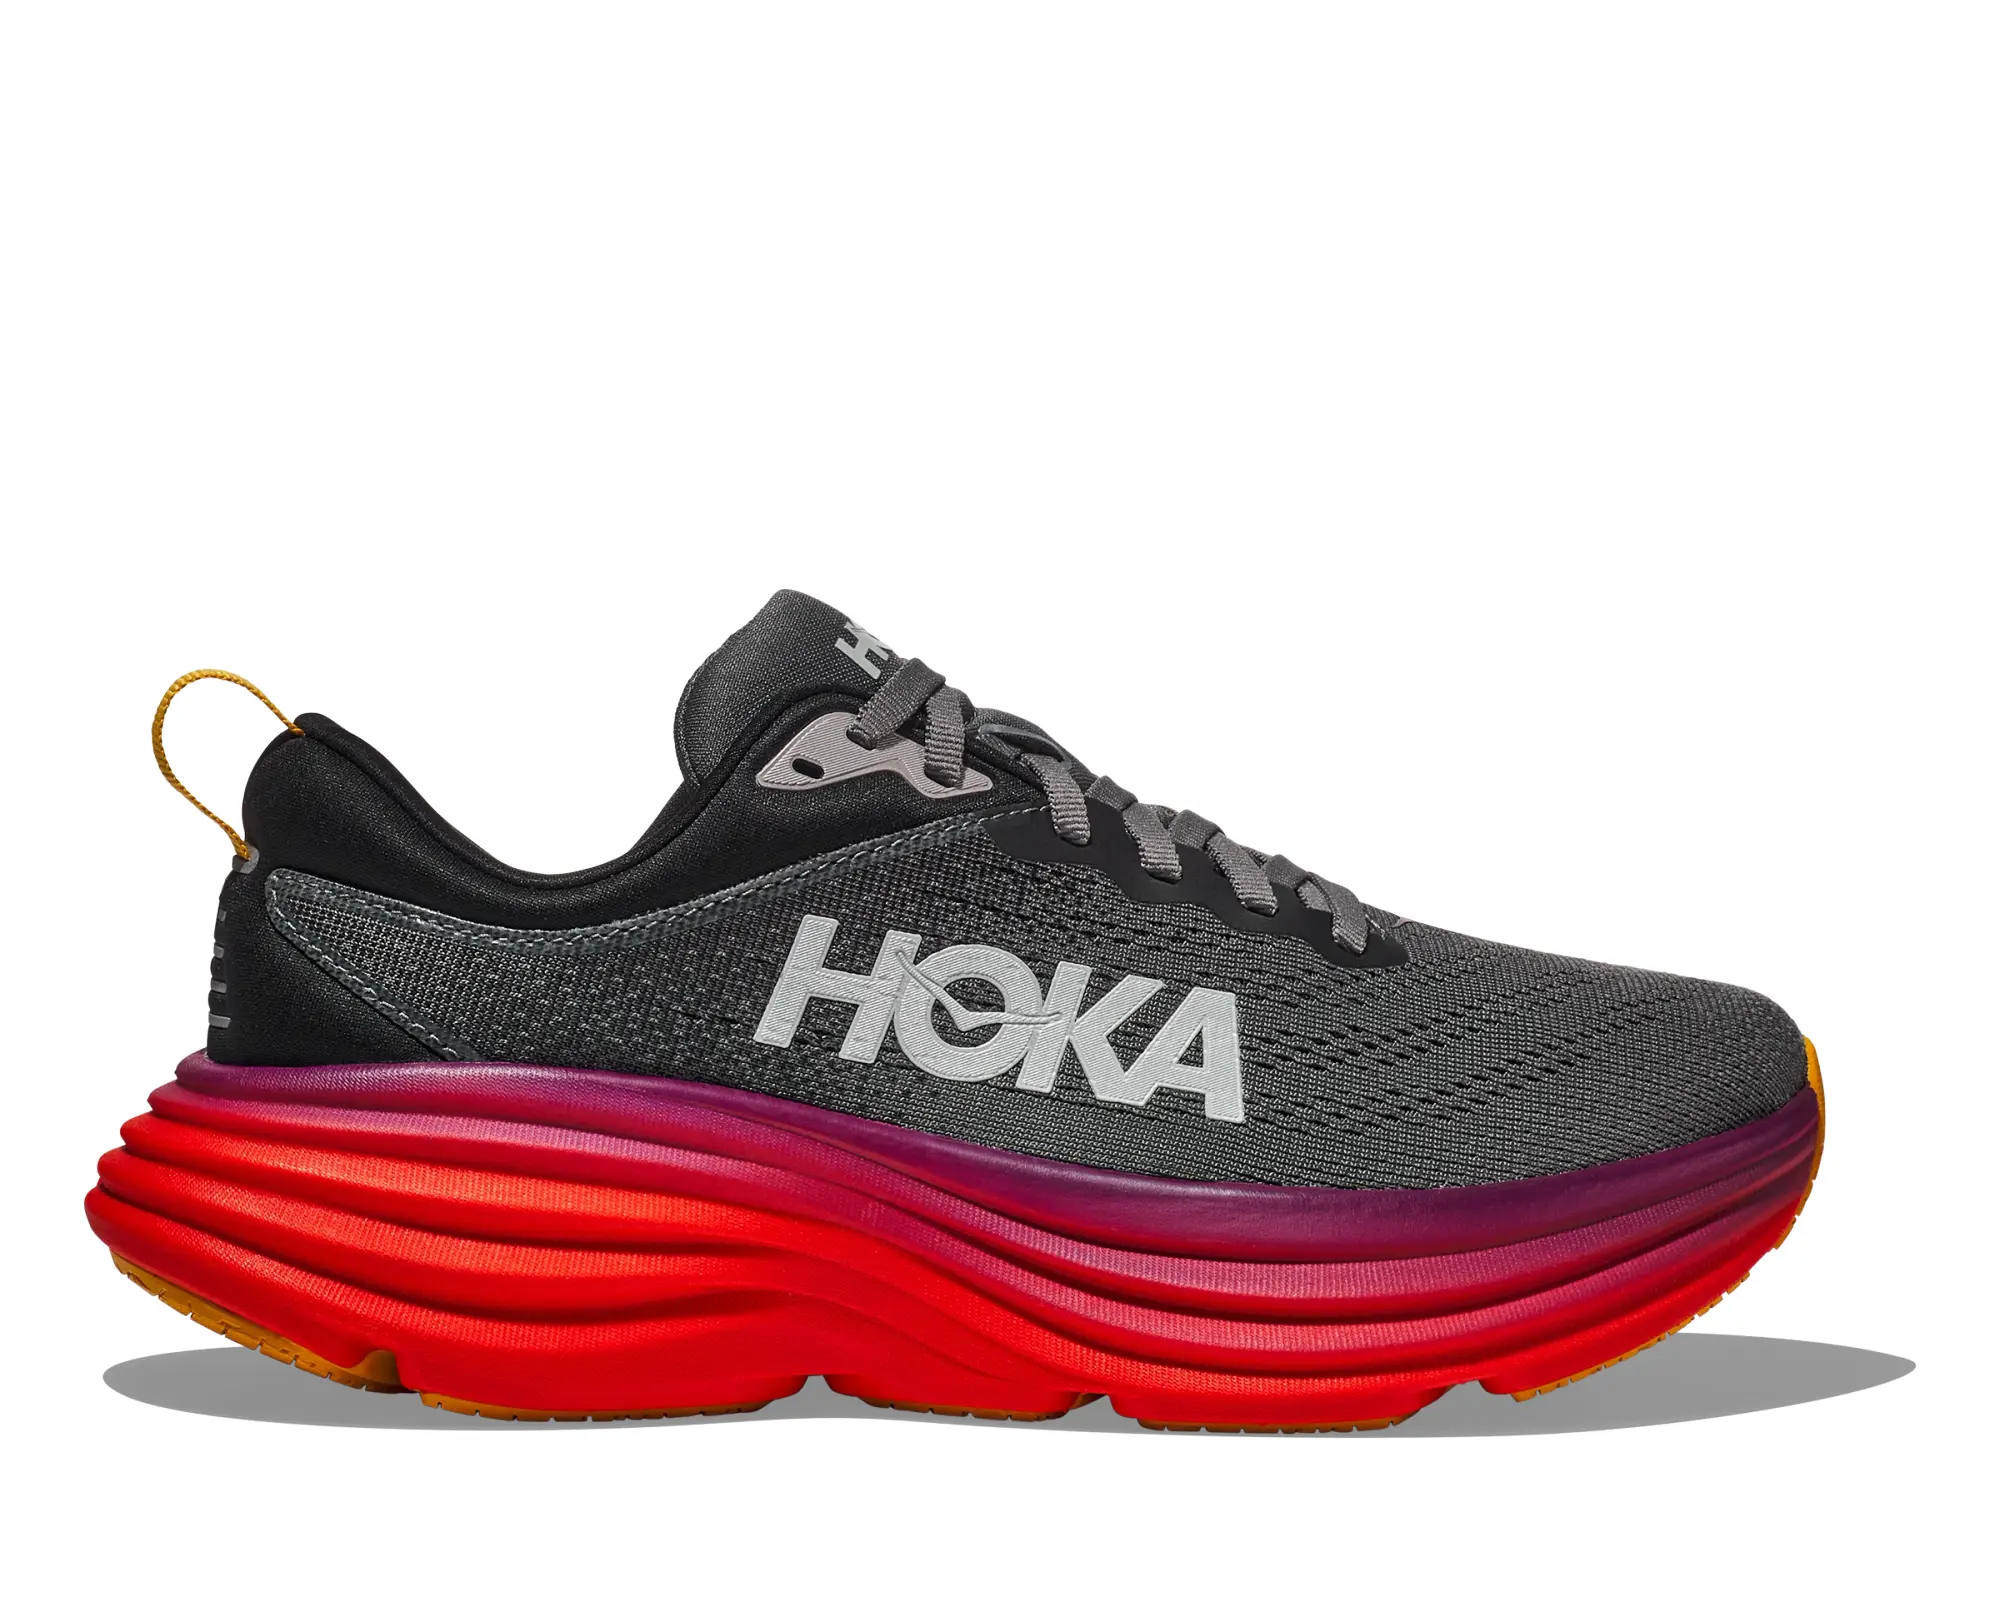 Hoka One One HOKA Men's Bondi 8 Running Shoes in Castlerock/Fiesta